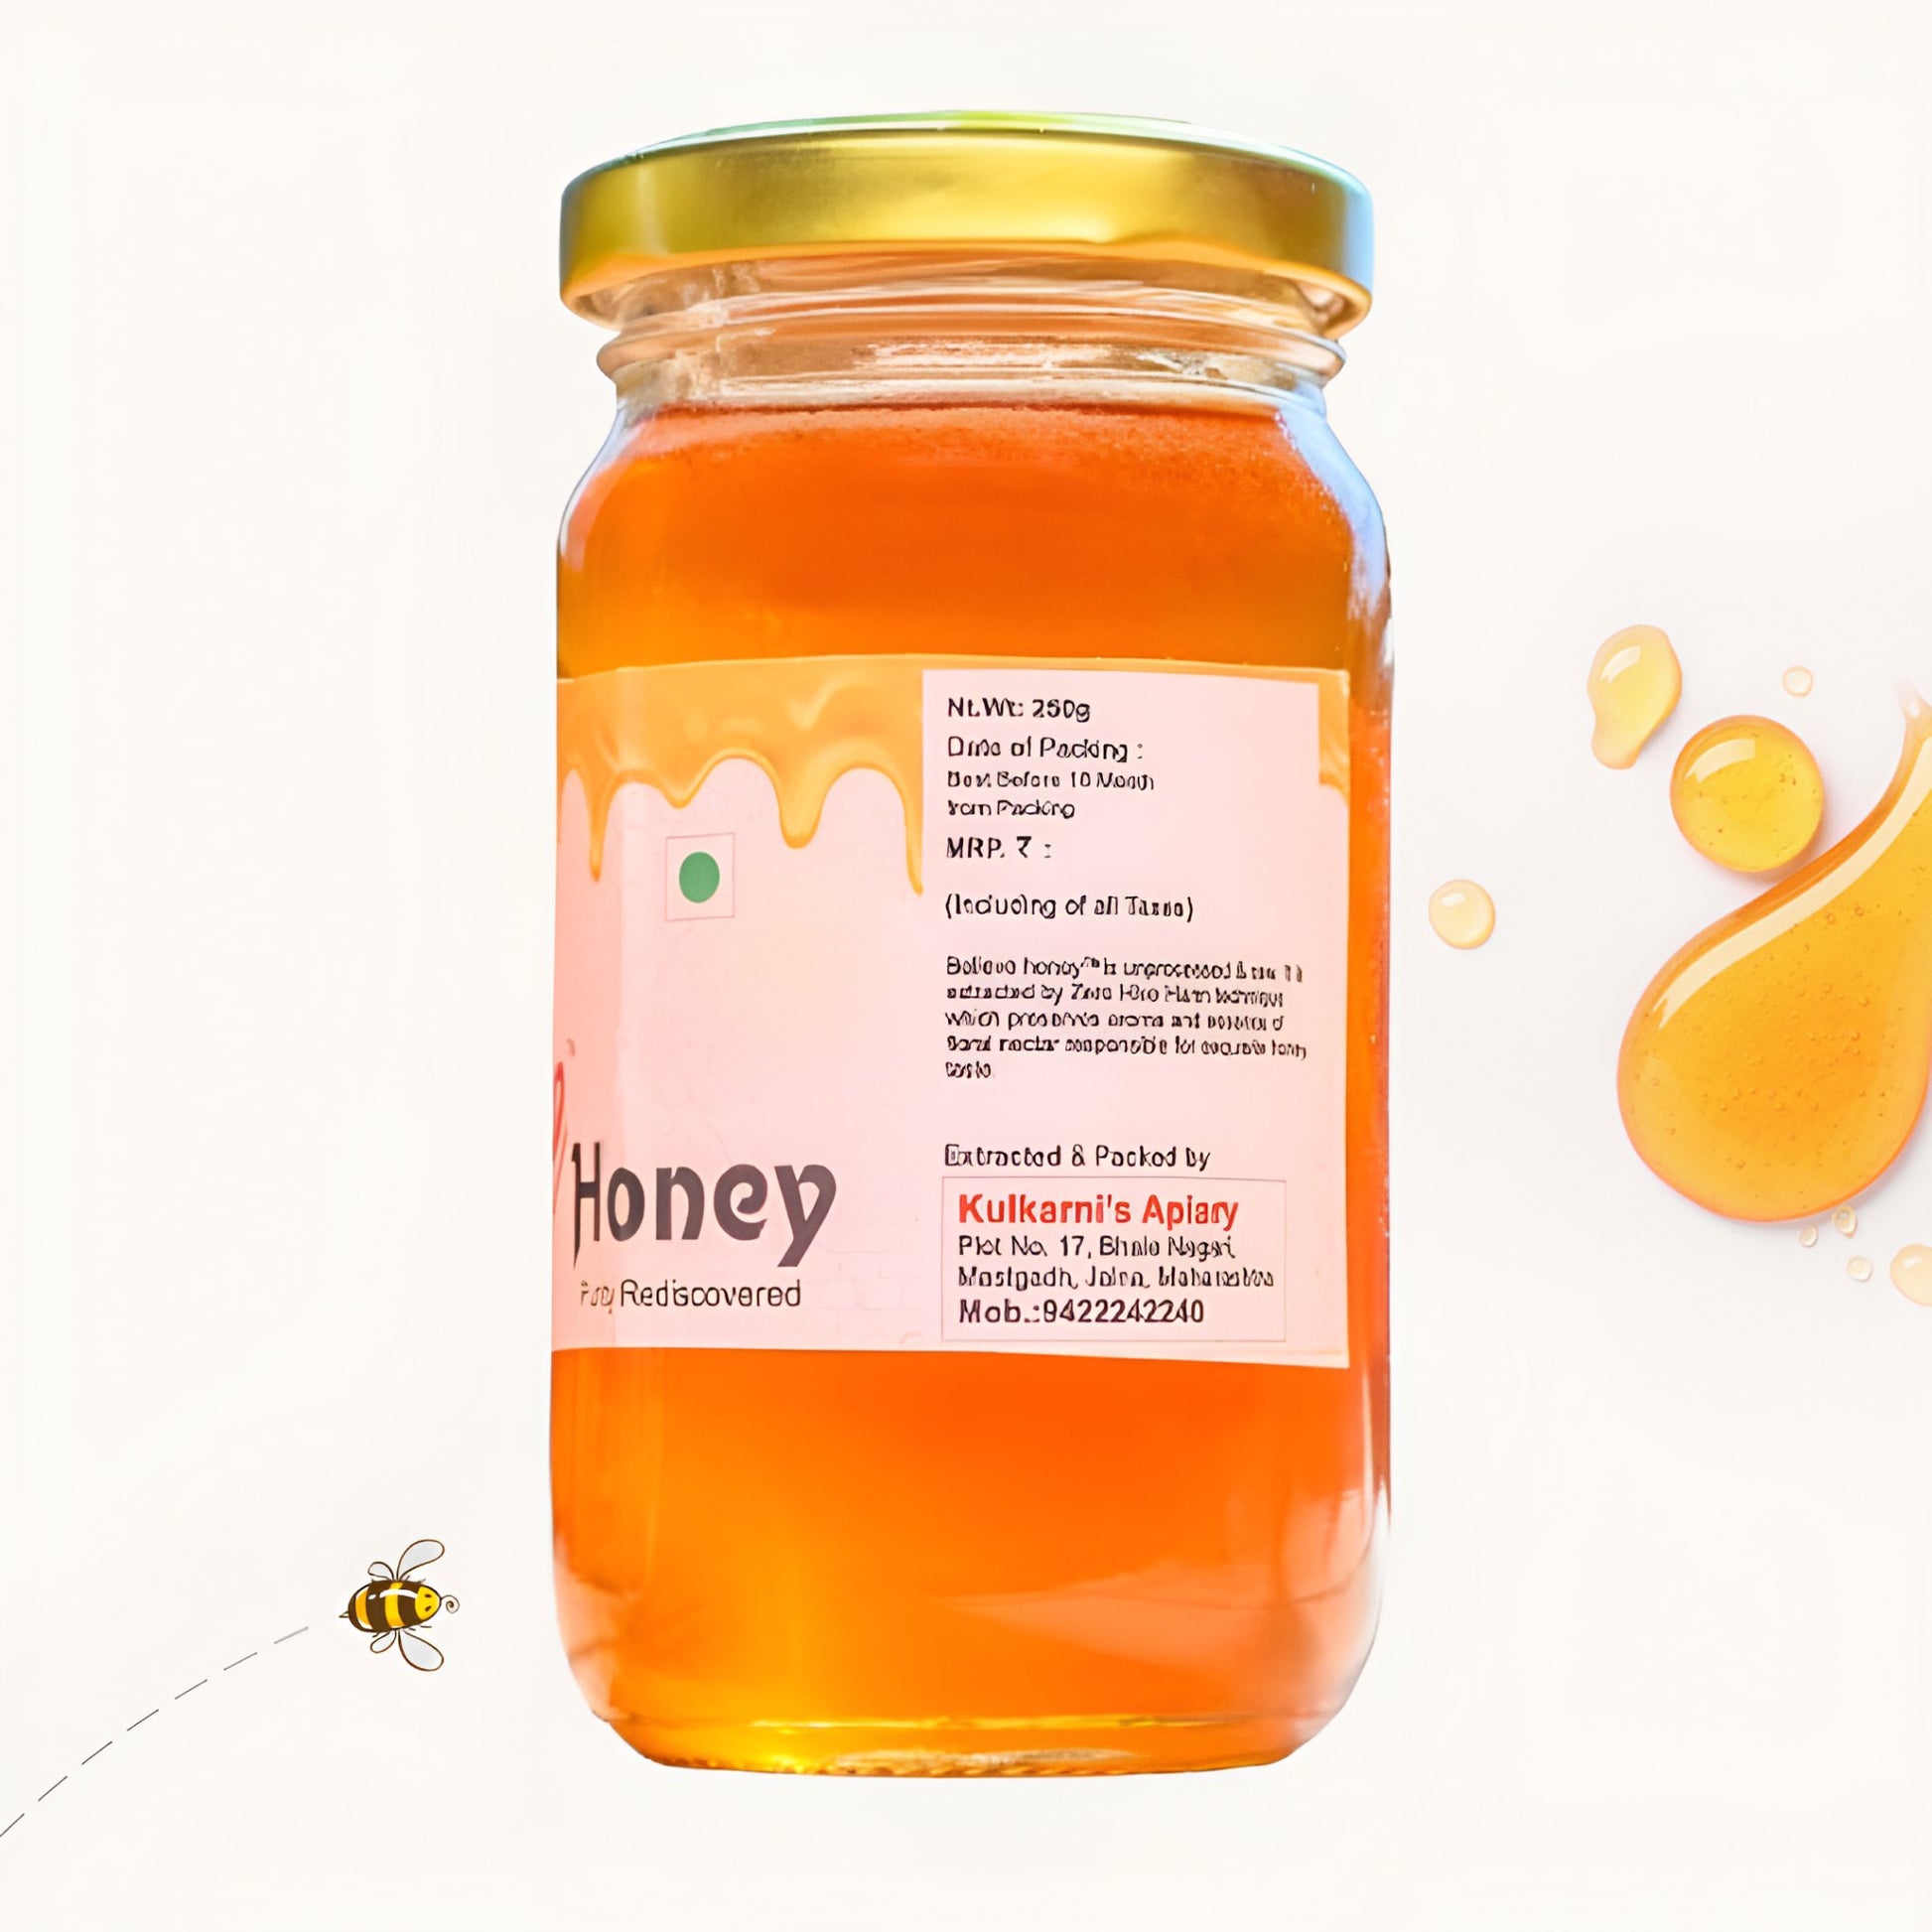 MUSTARD HONEY - Believe Honey